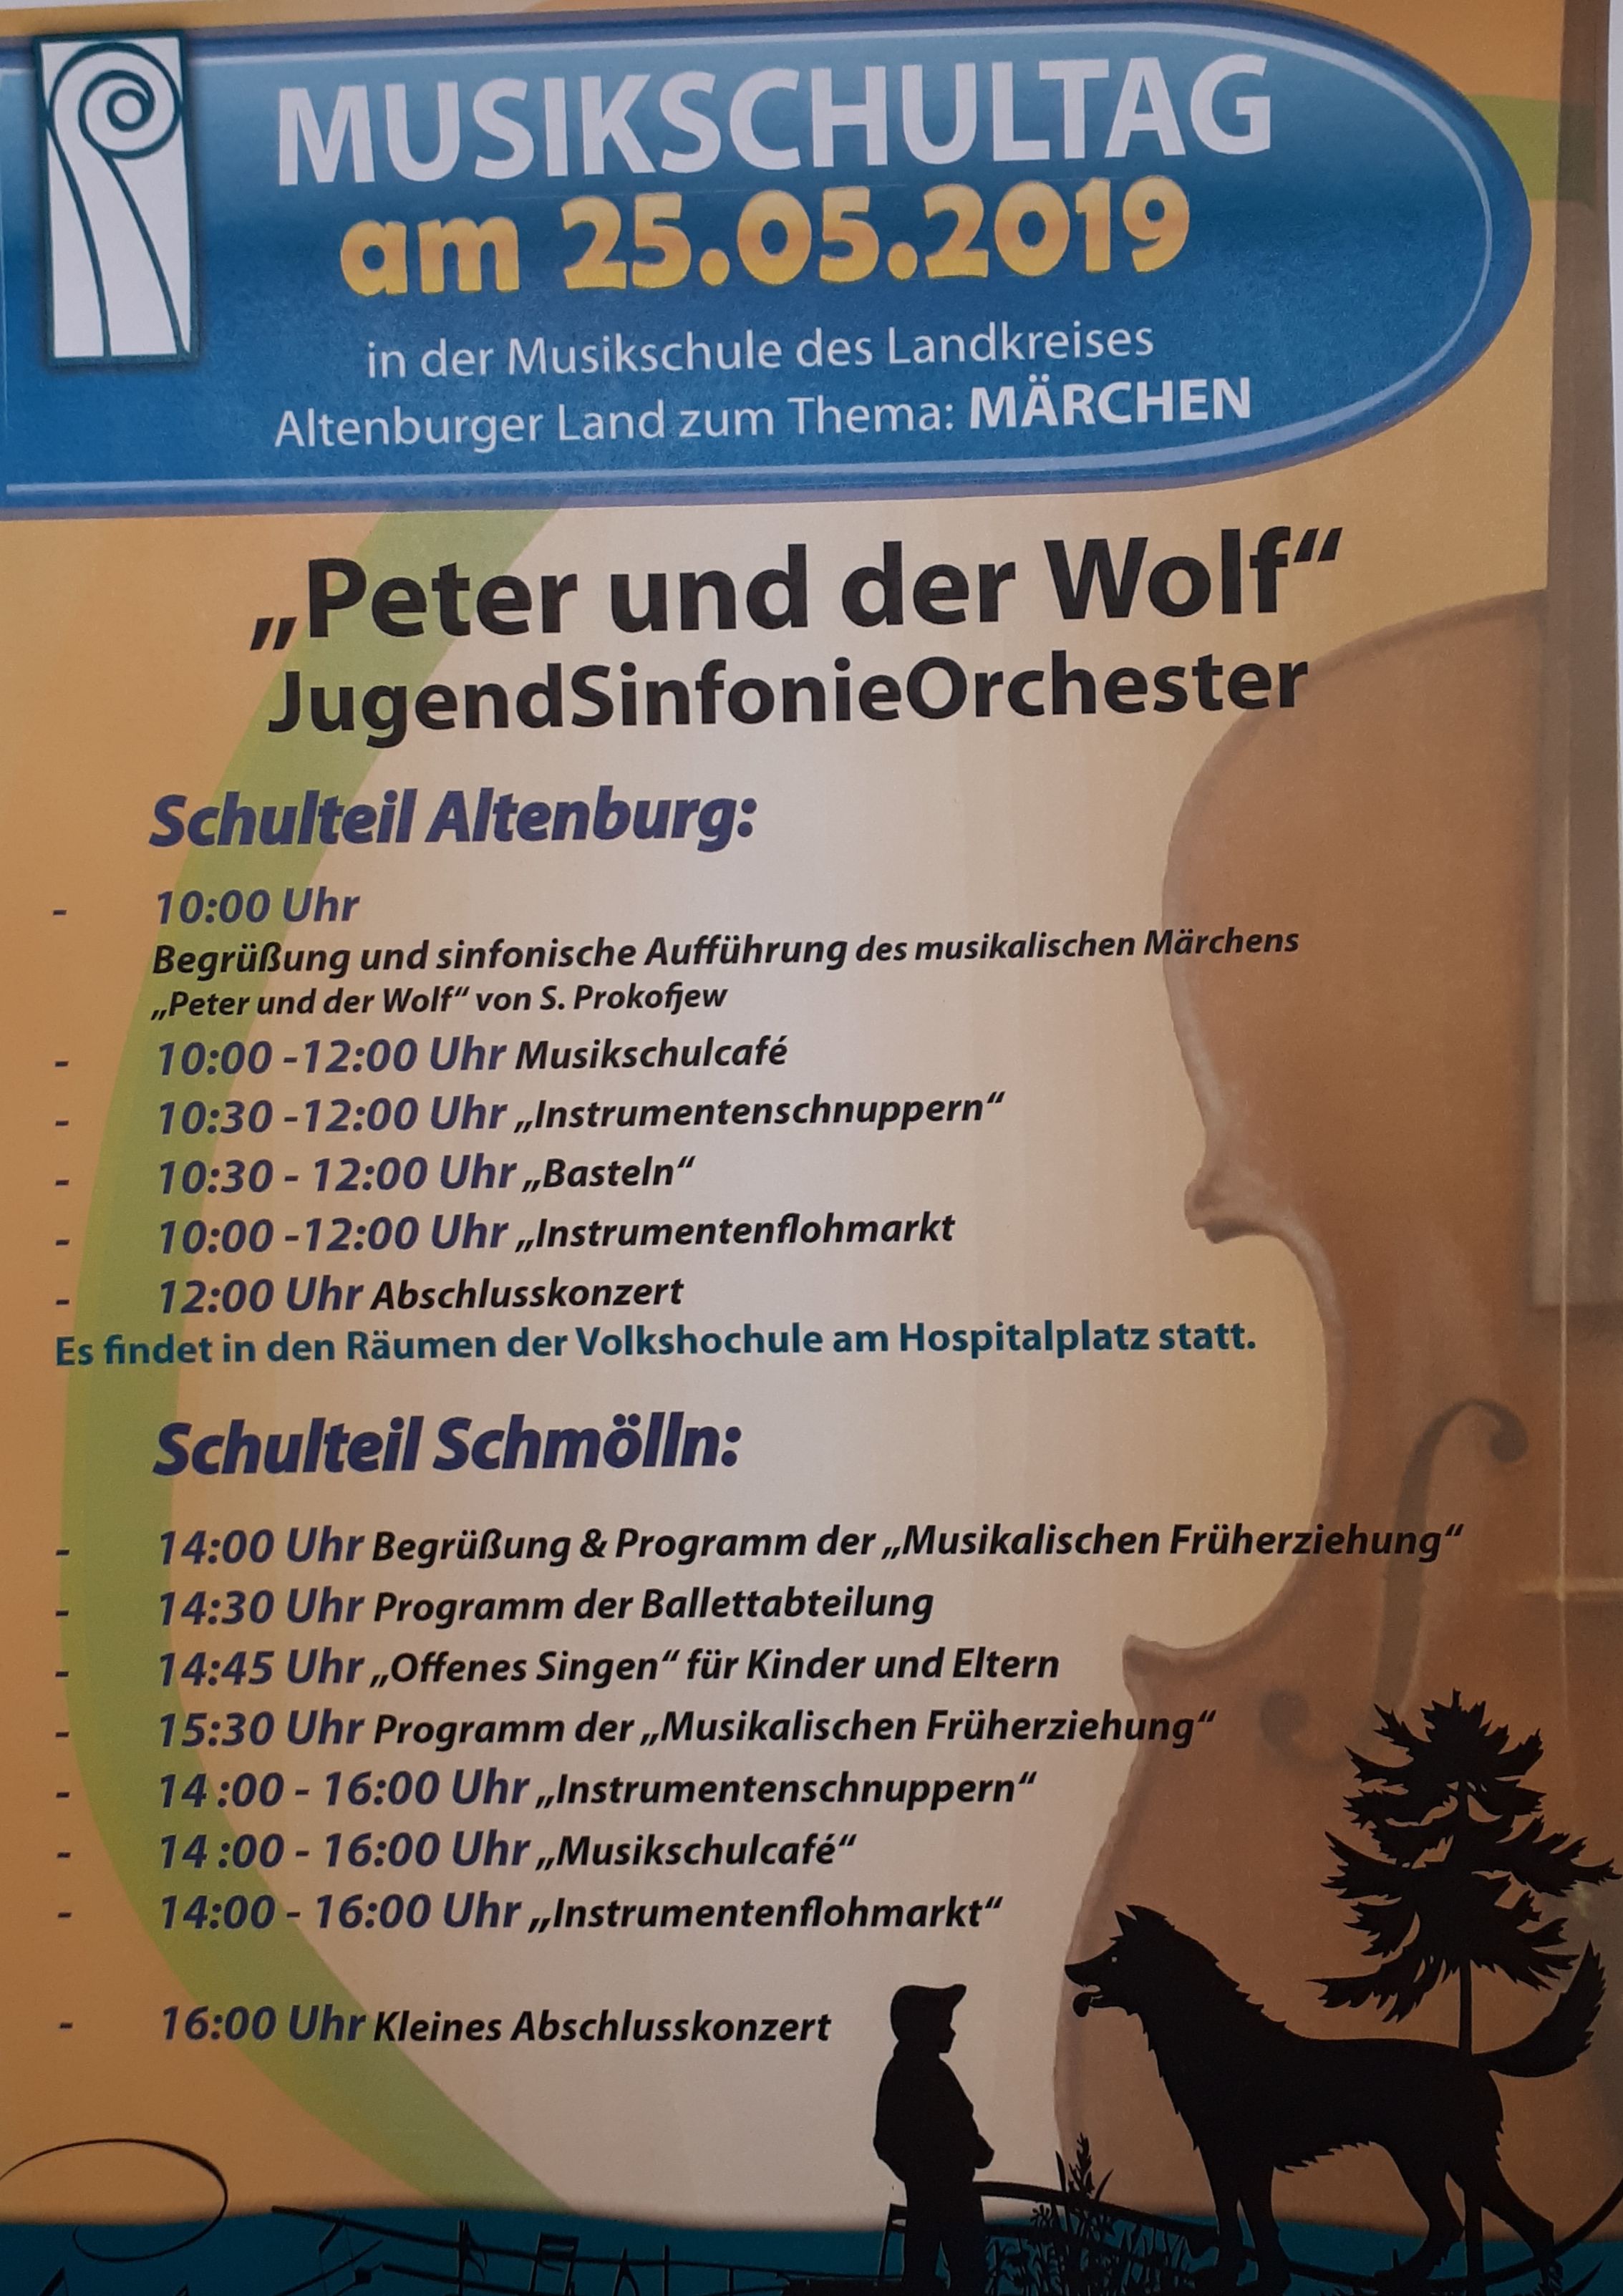 25. Mai 2019 - Musikschultag - Landratsamt Altenburger Land